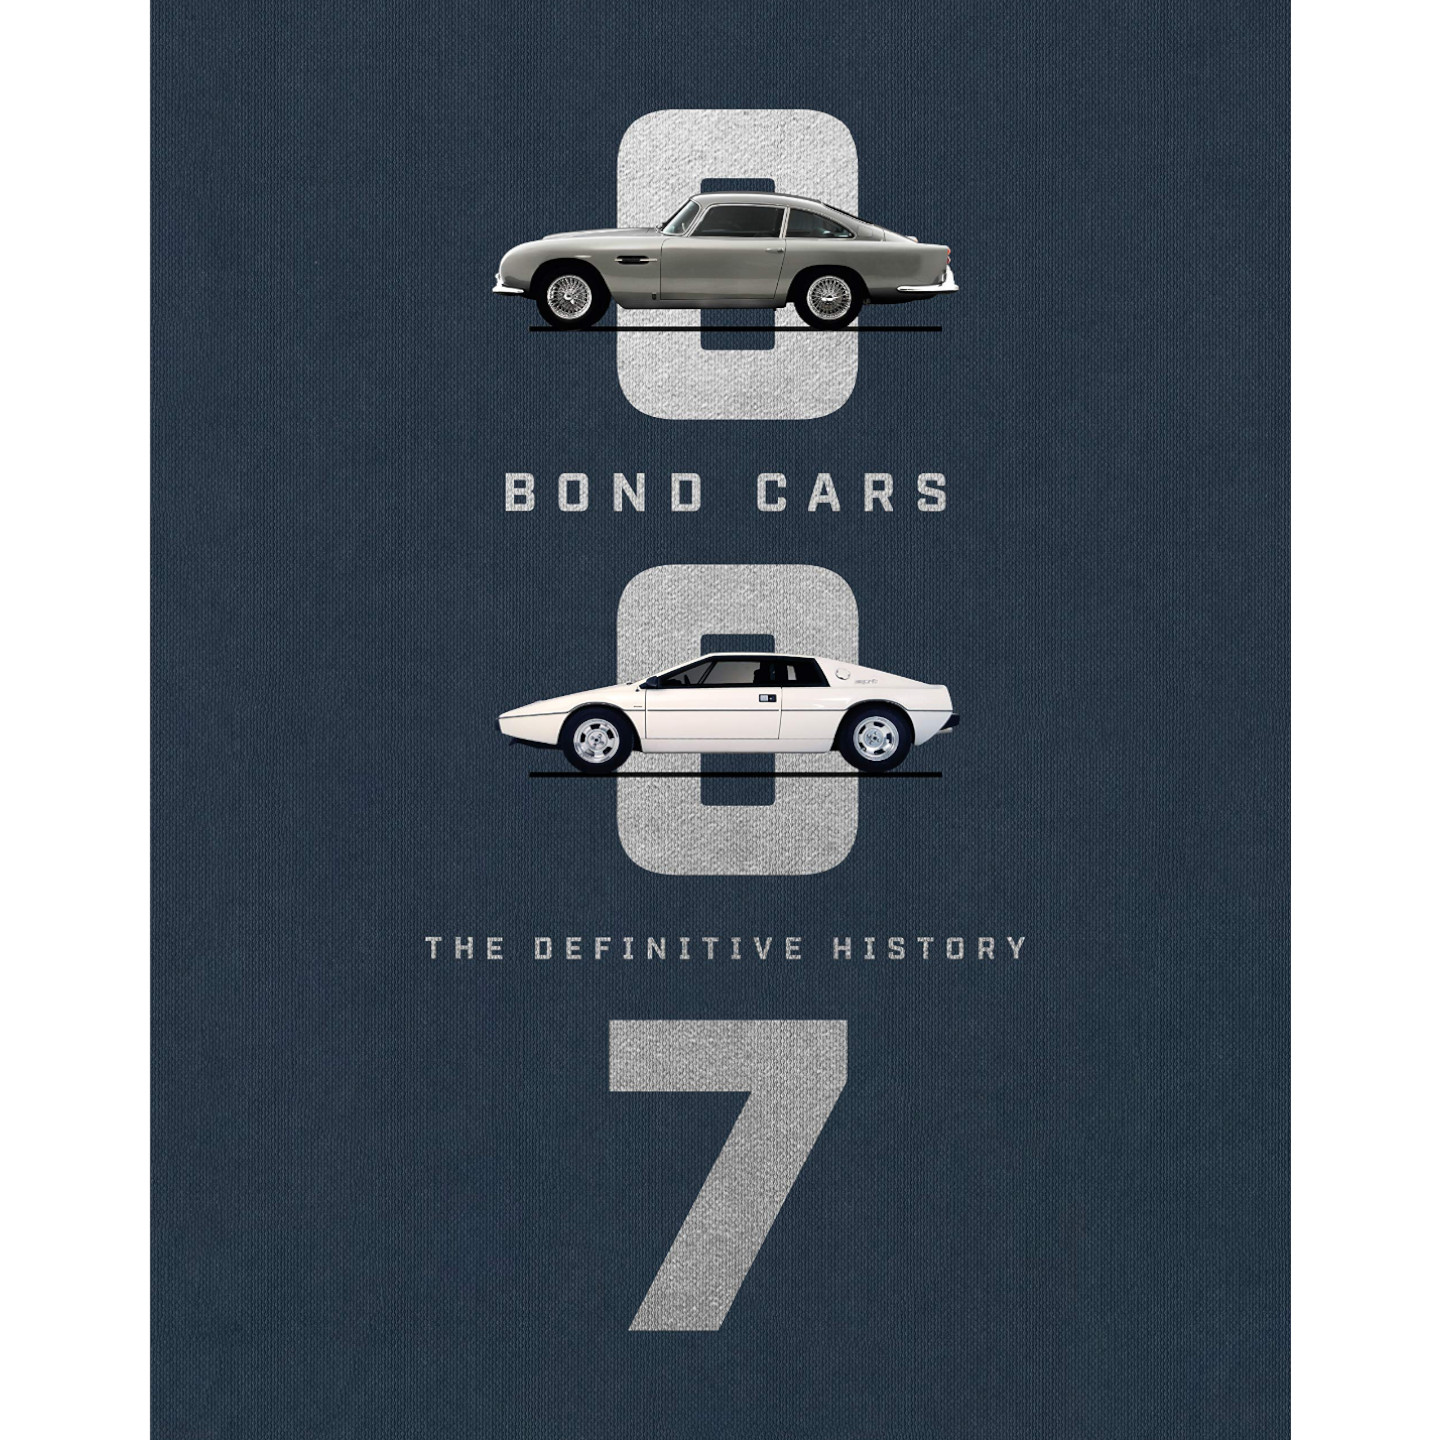 Bond Cars: The Definitive History by Jason Barlow